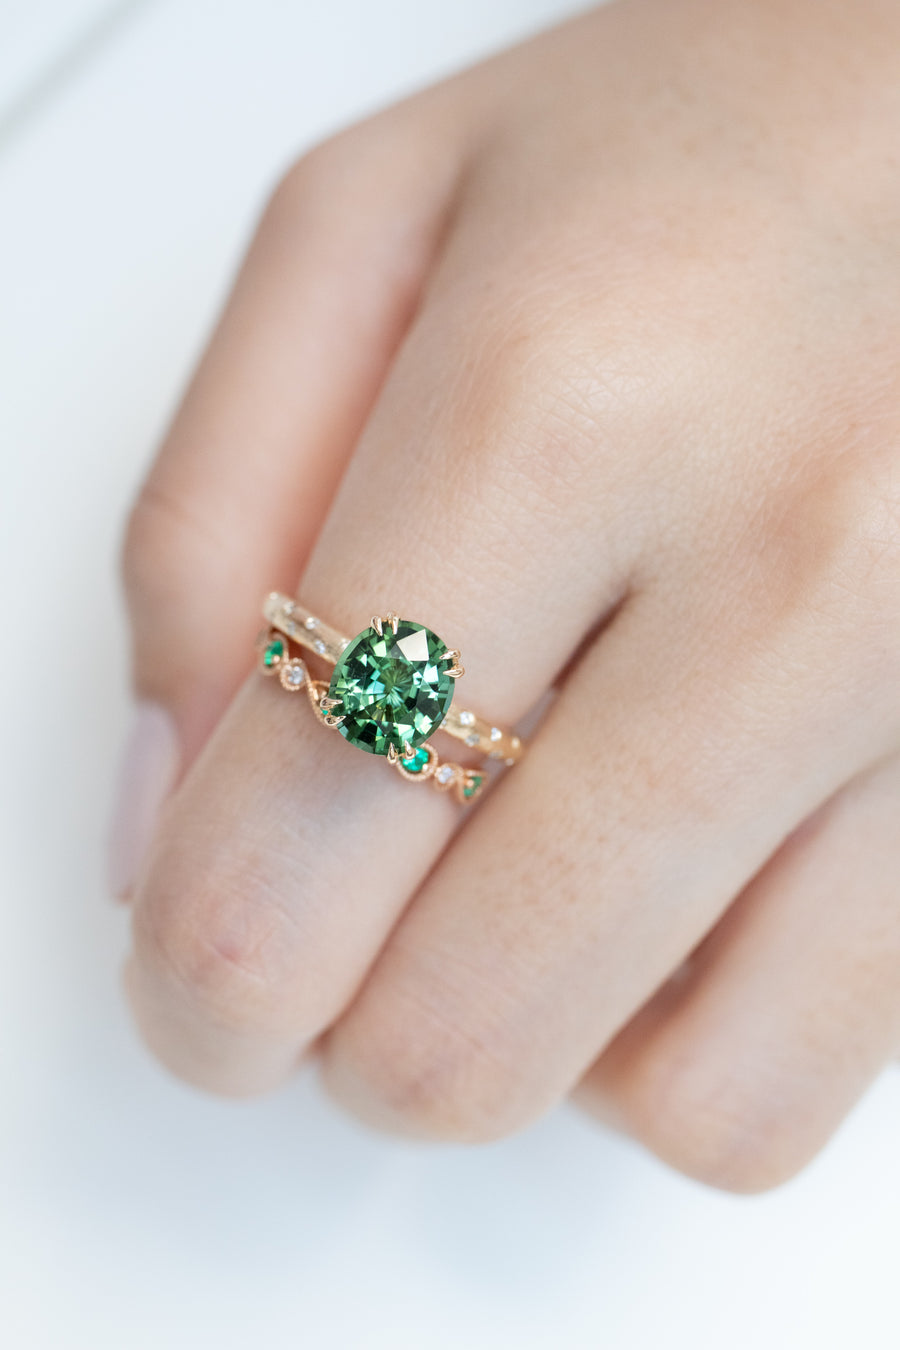 Total 0.064carat Natural Emerald & total 0.024carat Diamonds 18K Rose Gold Ring